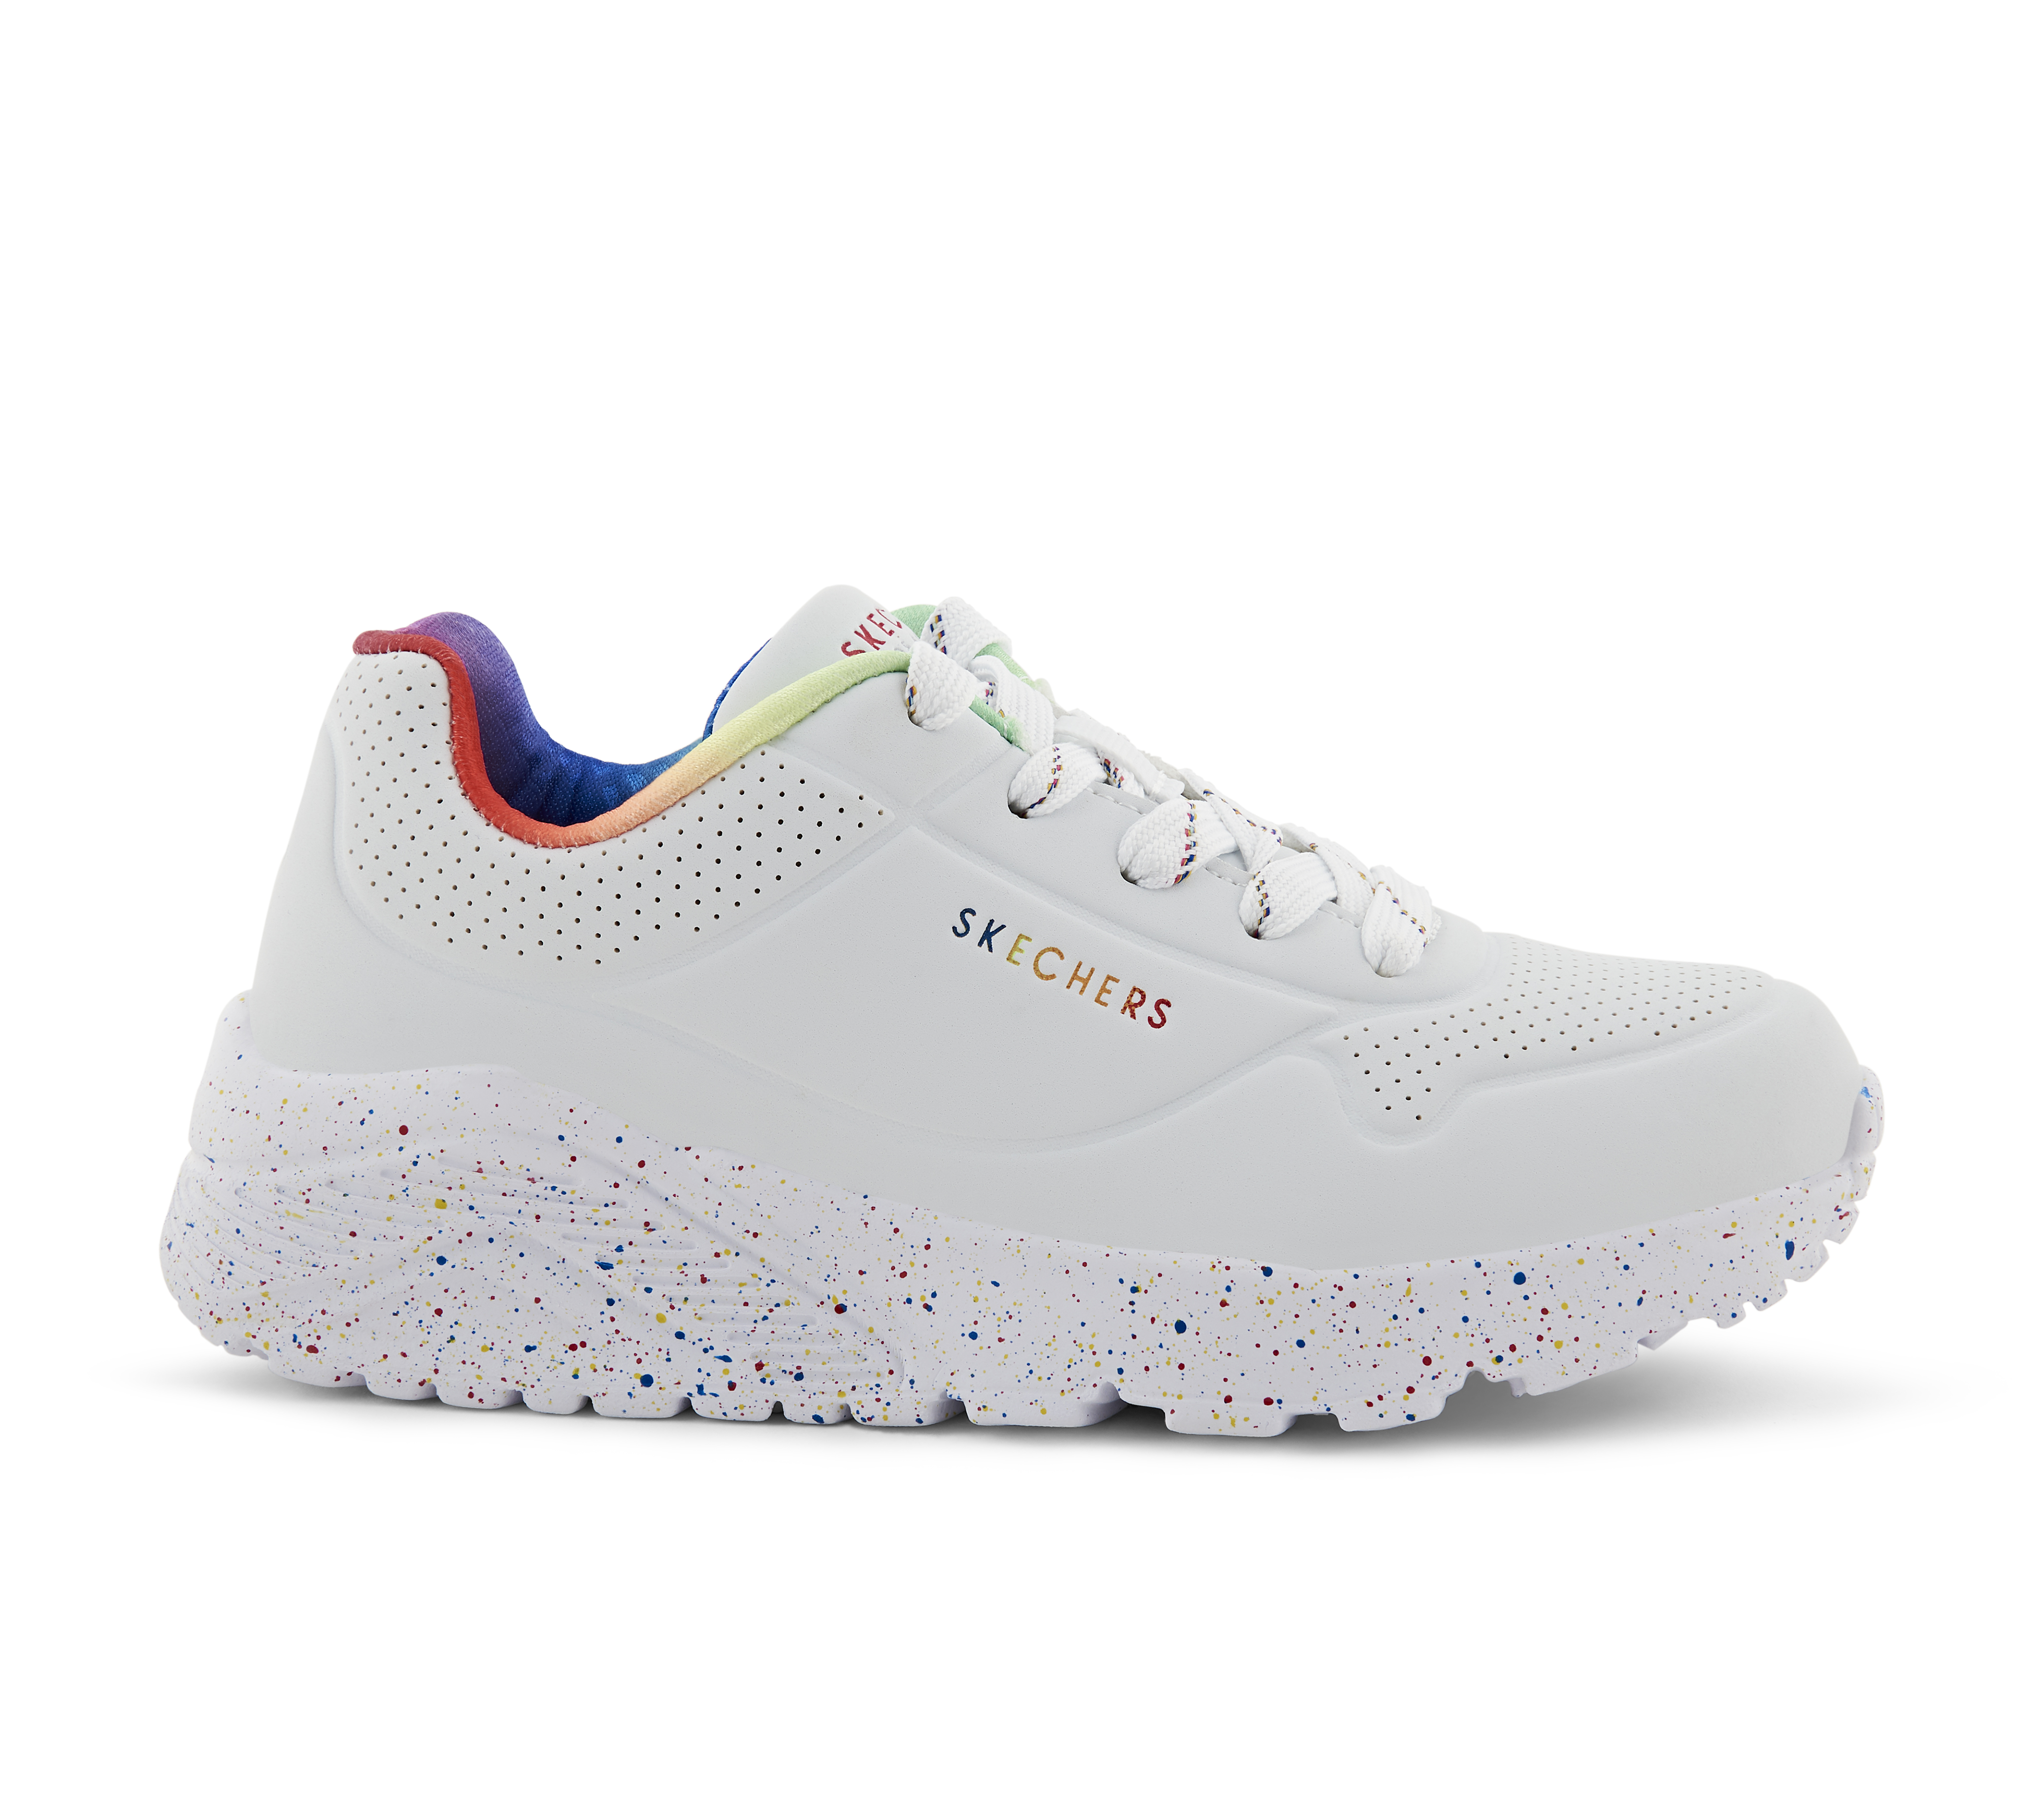 UNO LITE-RAINBOW SPECKLE, WHITE/MULTI Footwear Right View